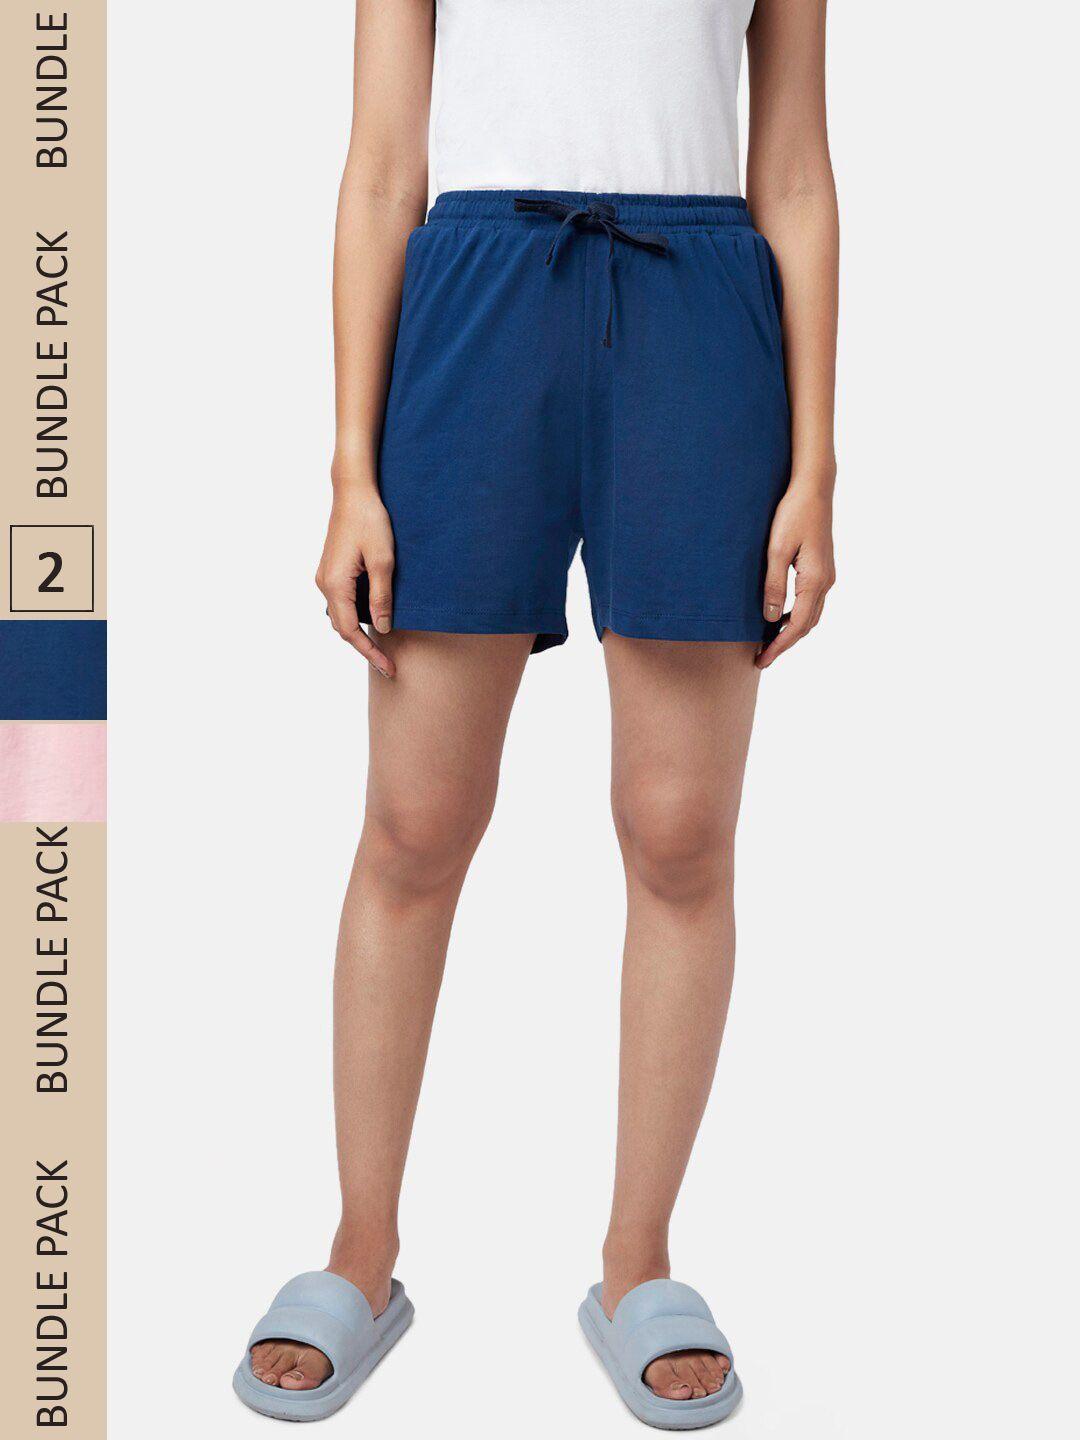 yu by pantaloons women navy blue & pink pack of 2 lounge shorts